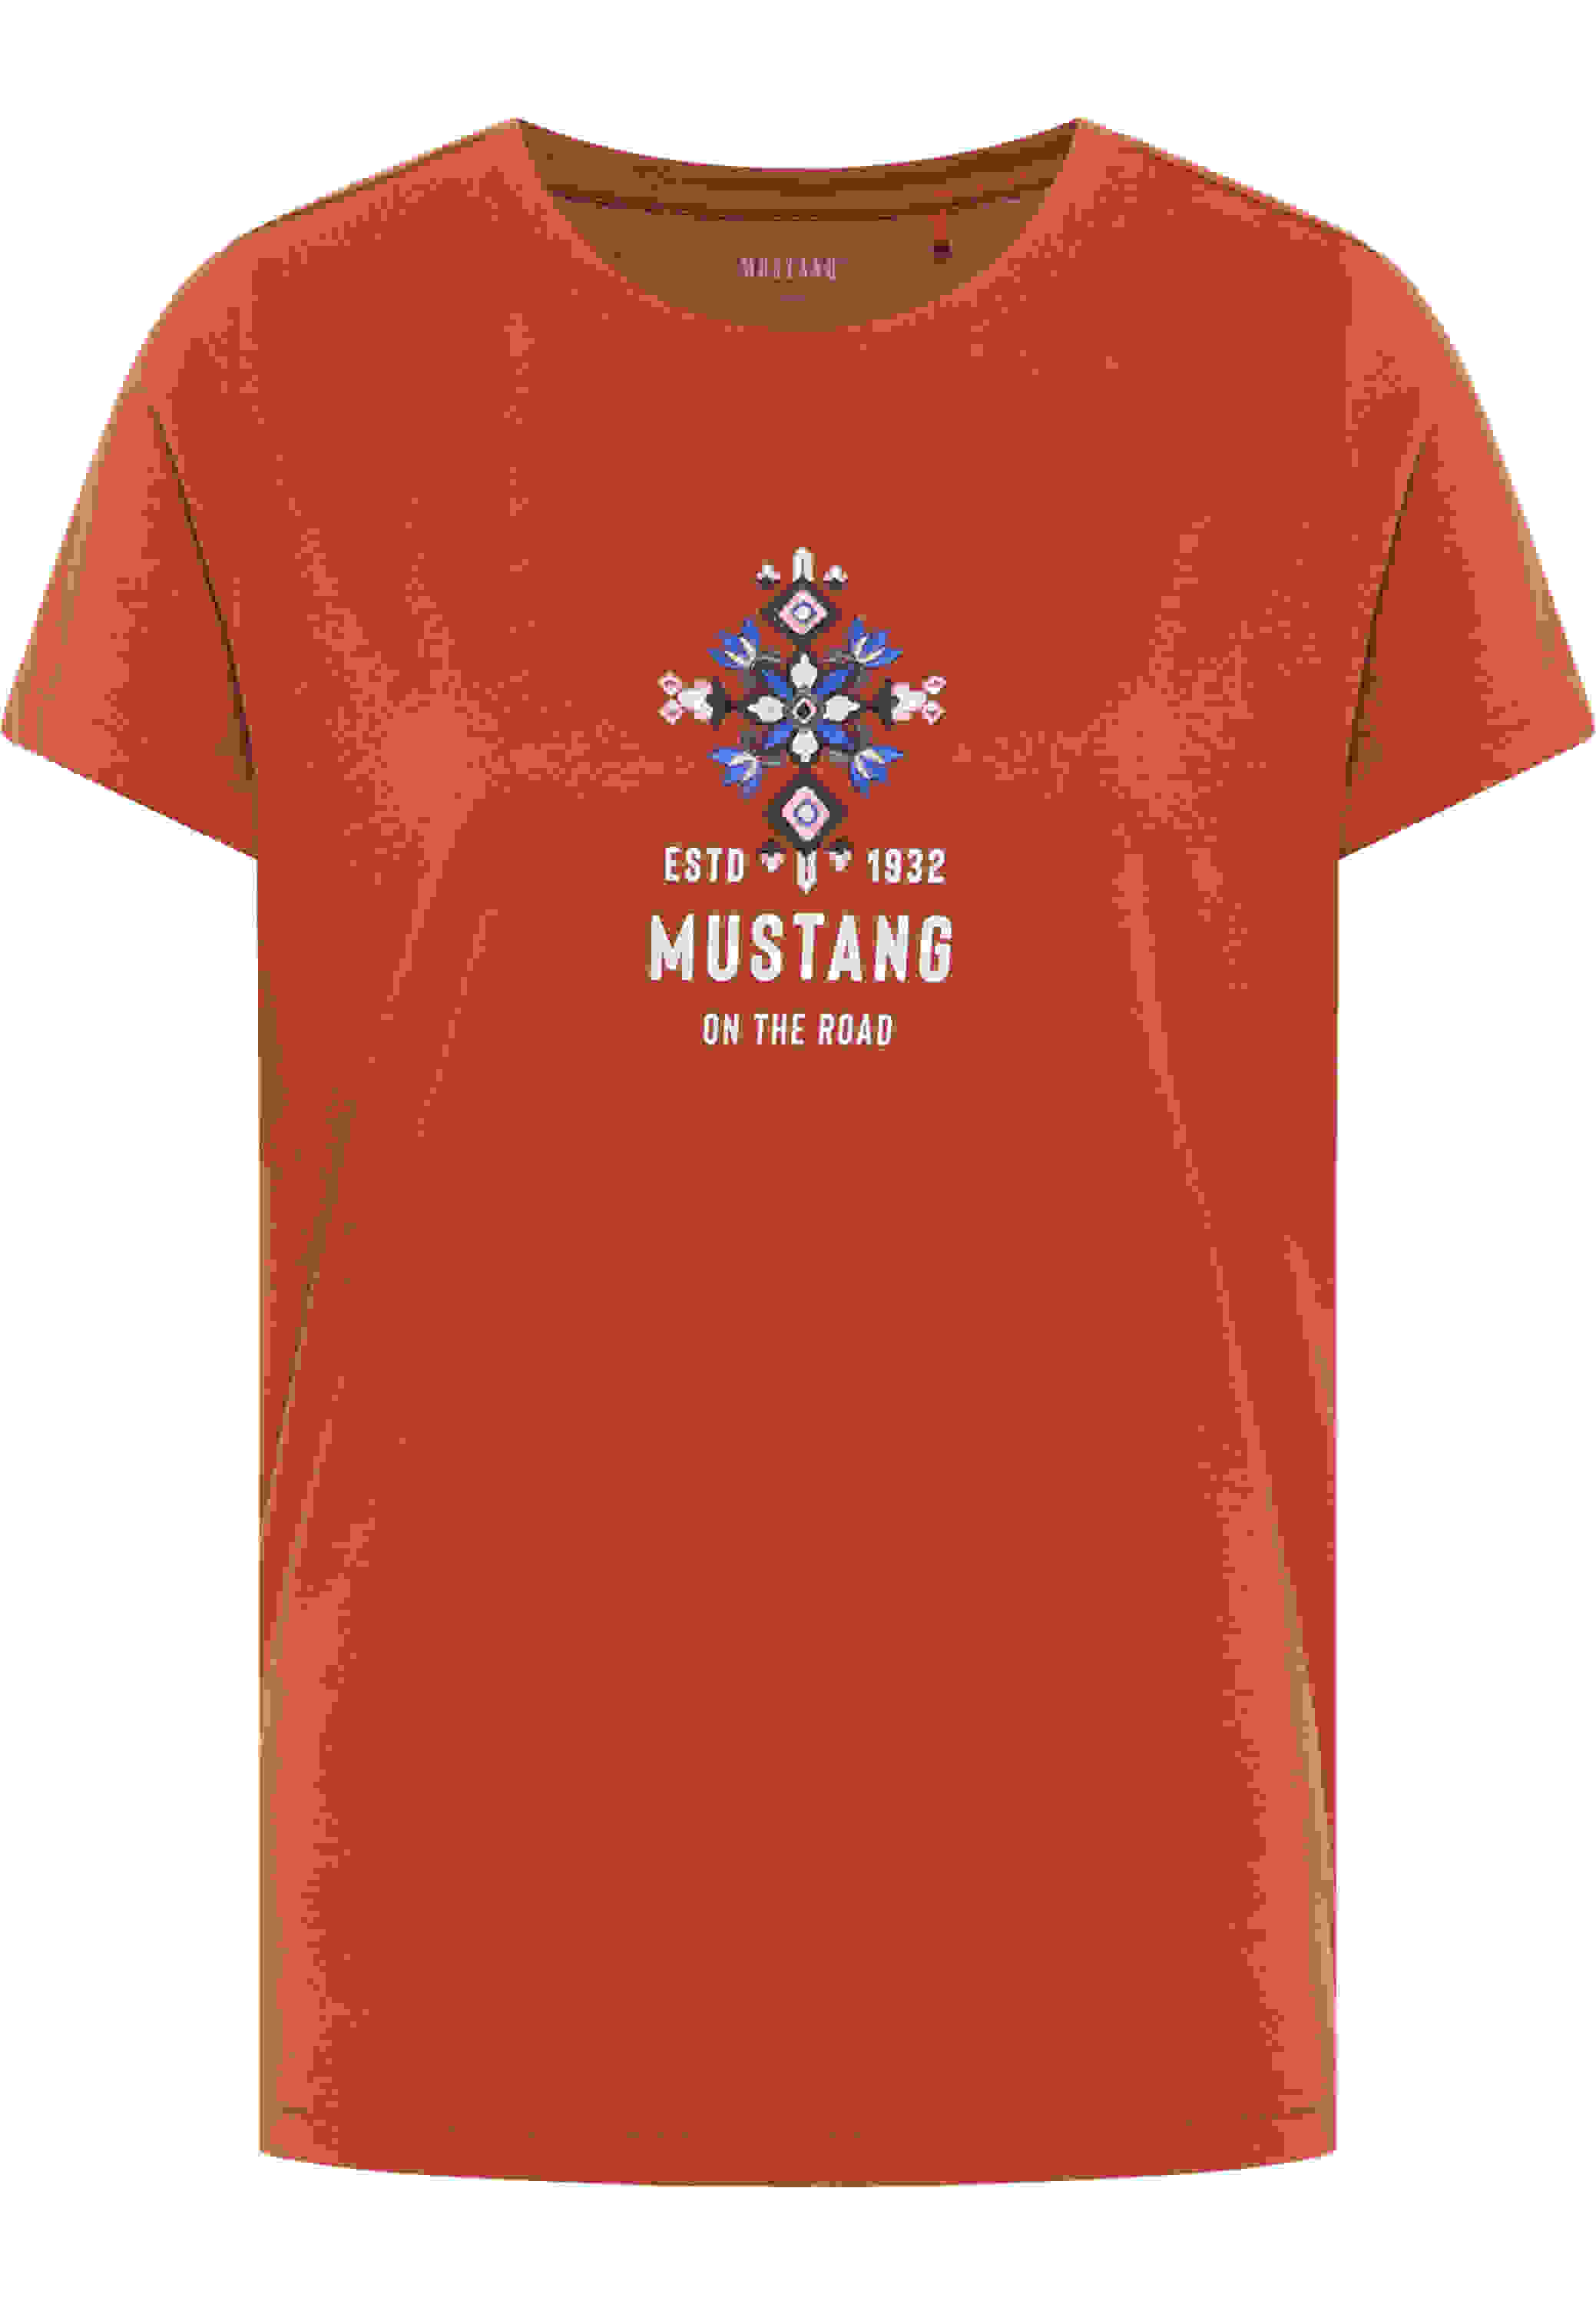 Print-Shirt von Mustang jetzt Mustang kaufen bei bei